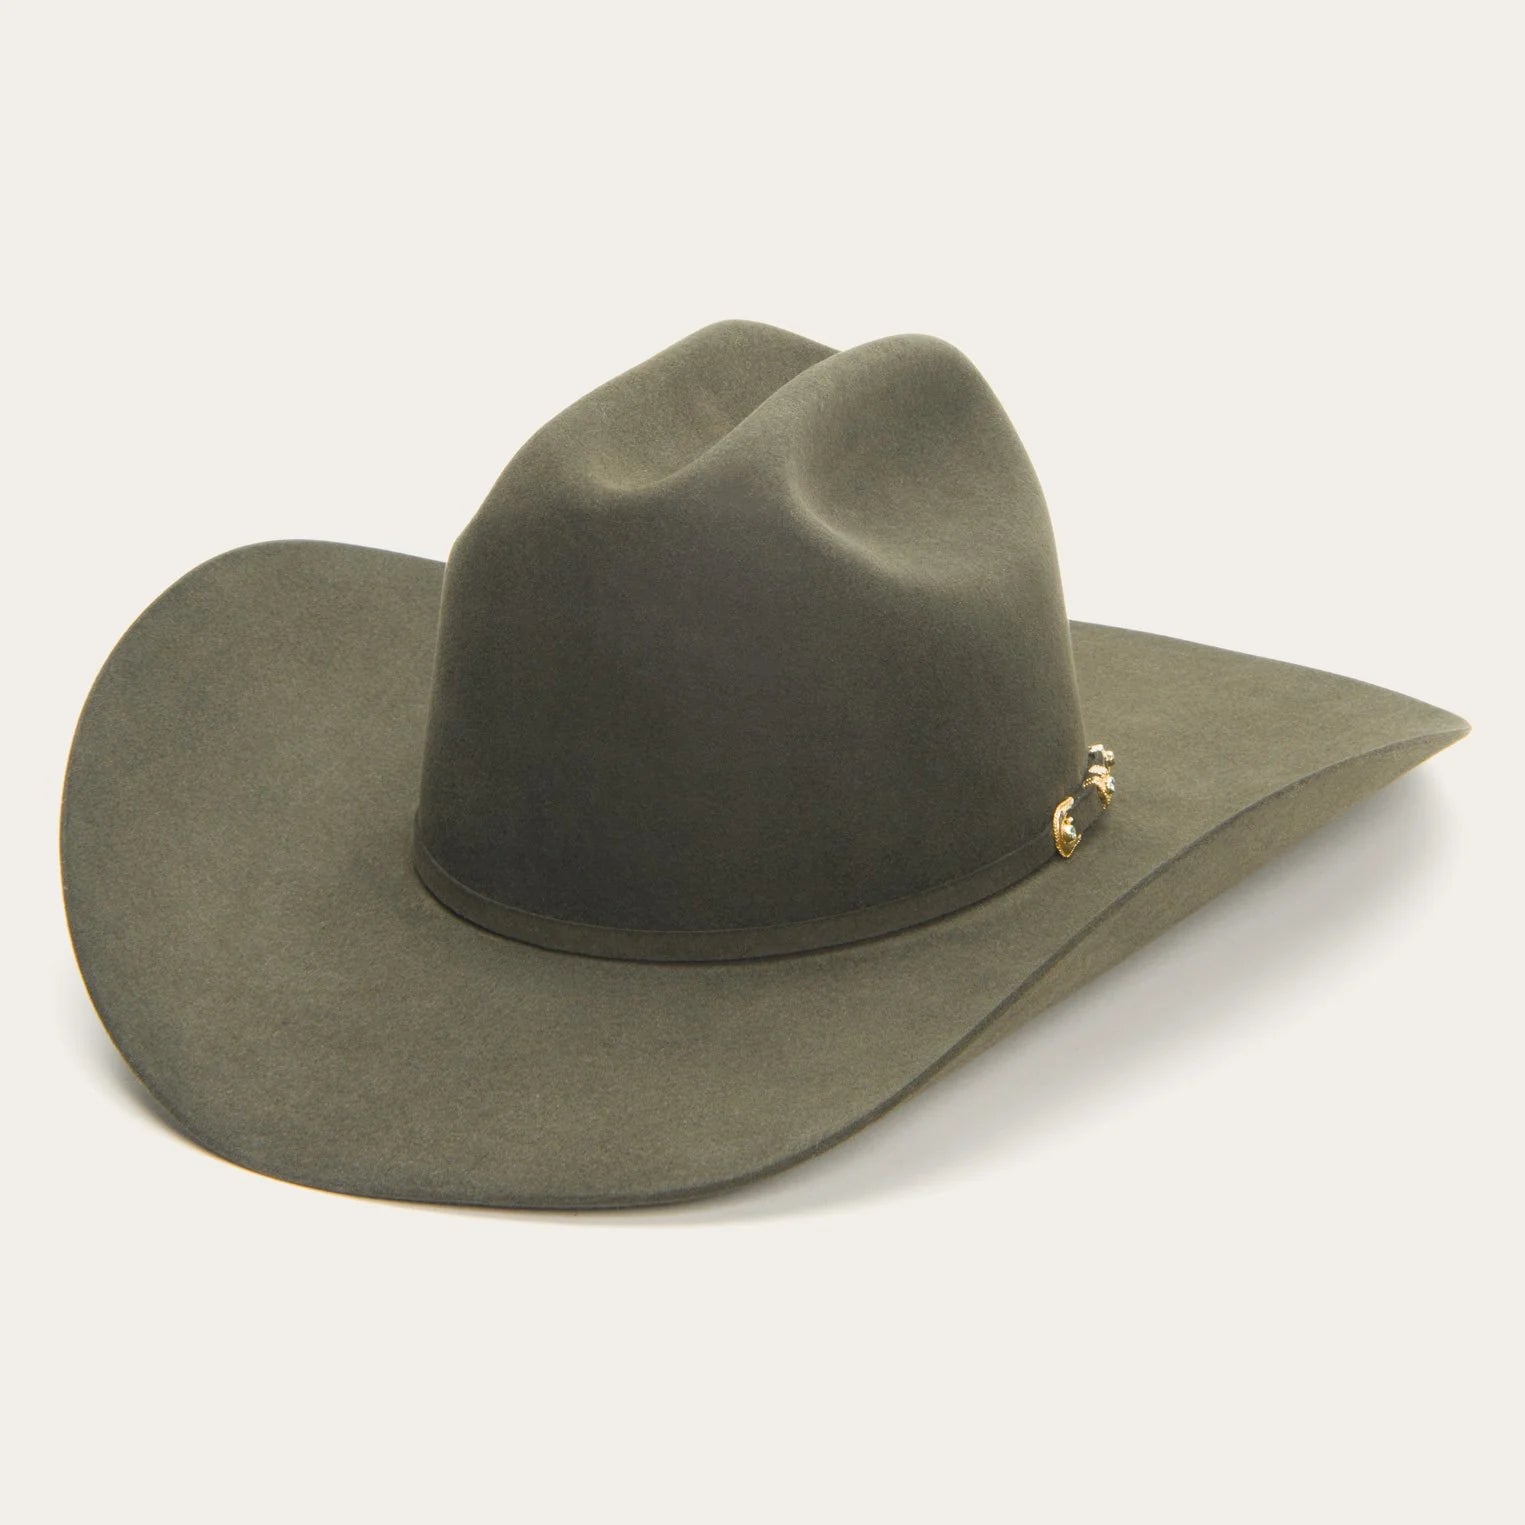 Stetson Munford 6x Sage Cowboy Felt Hat